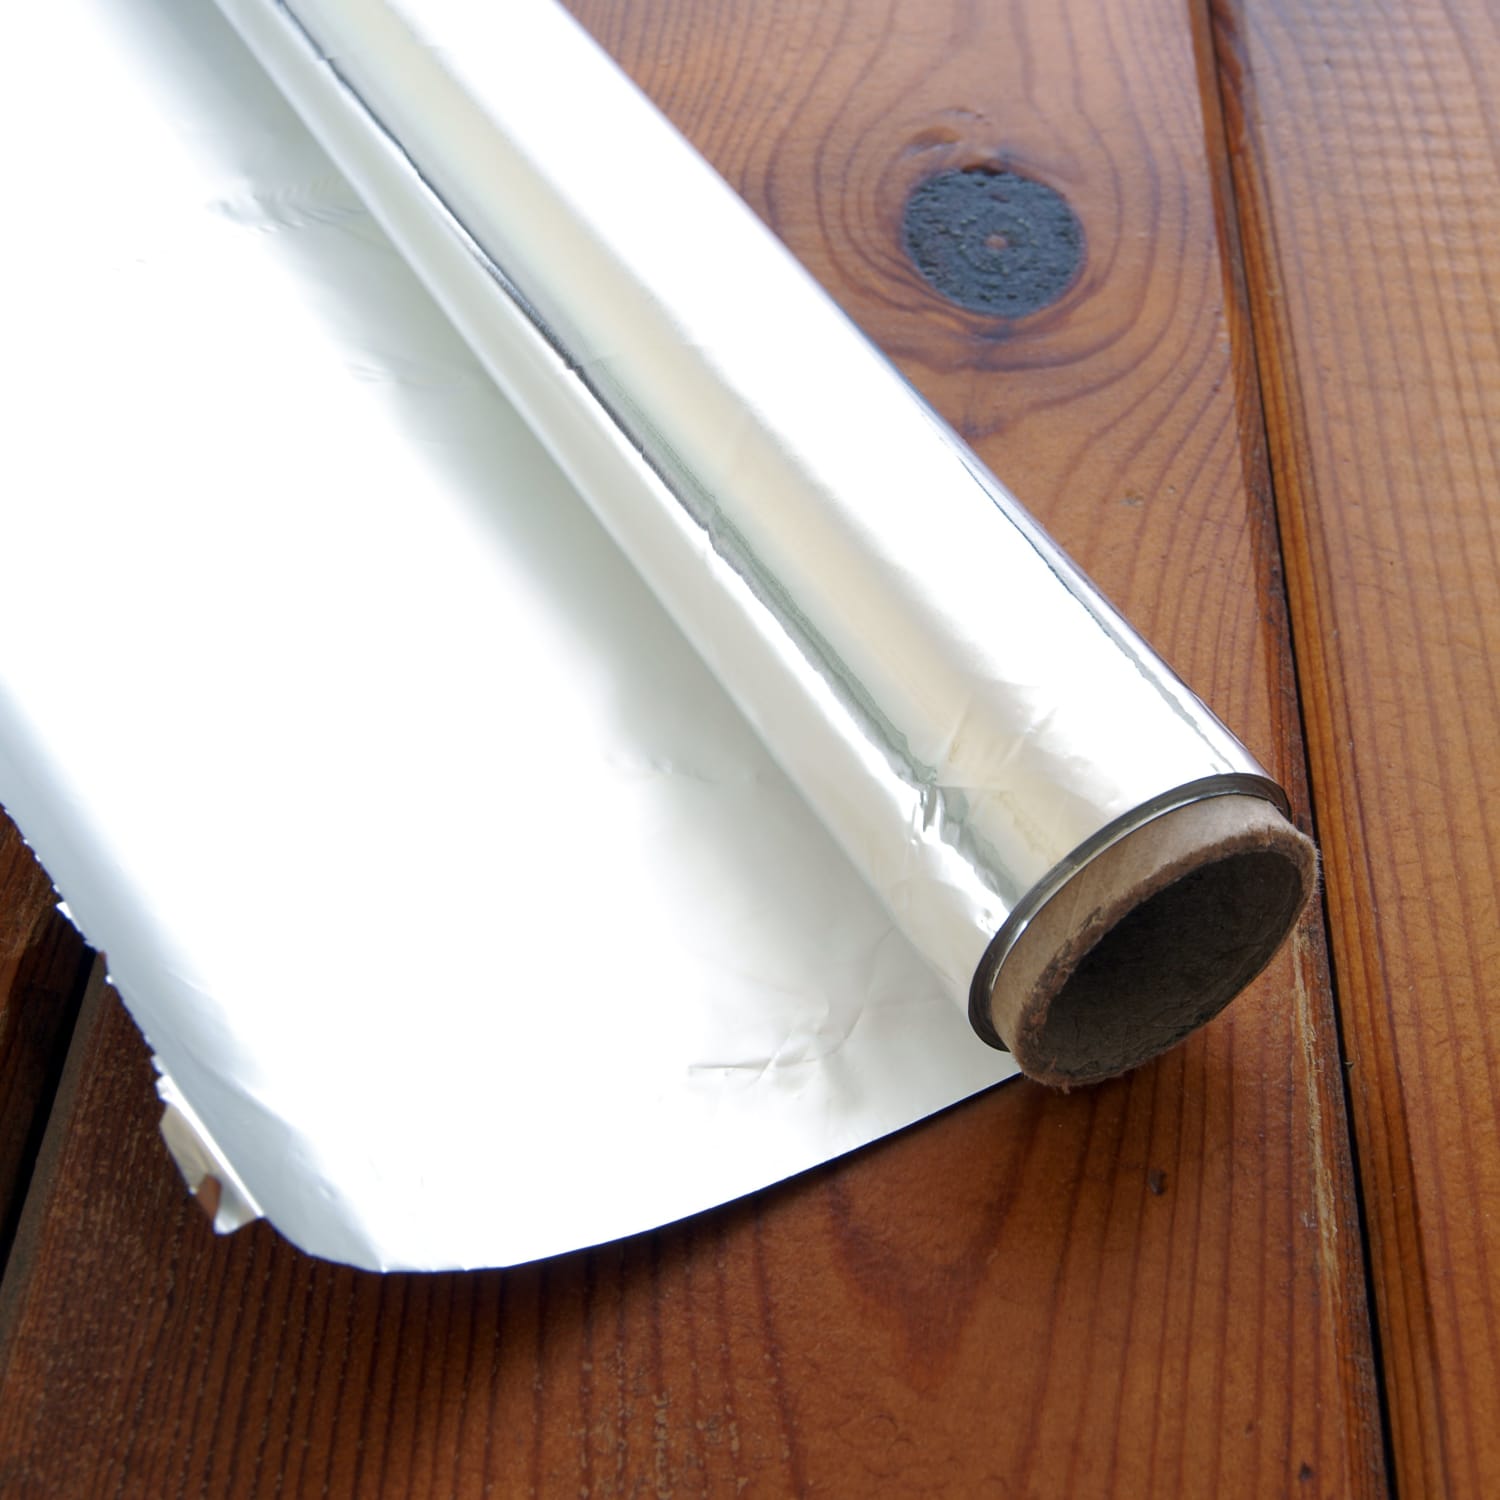 This Genius Method For Fixing An Uneven Aluminum Foil Roll Requires No Tools